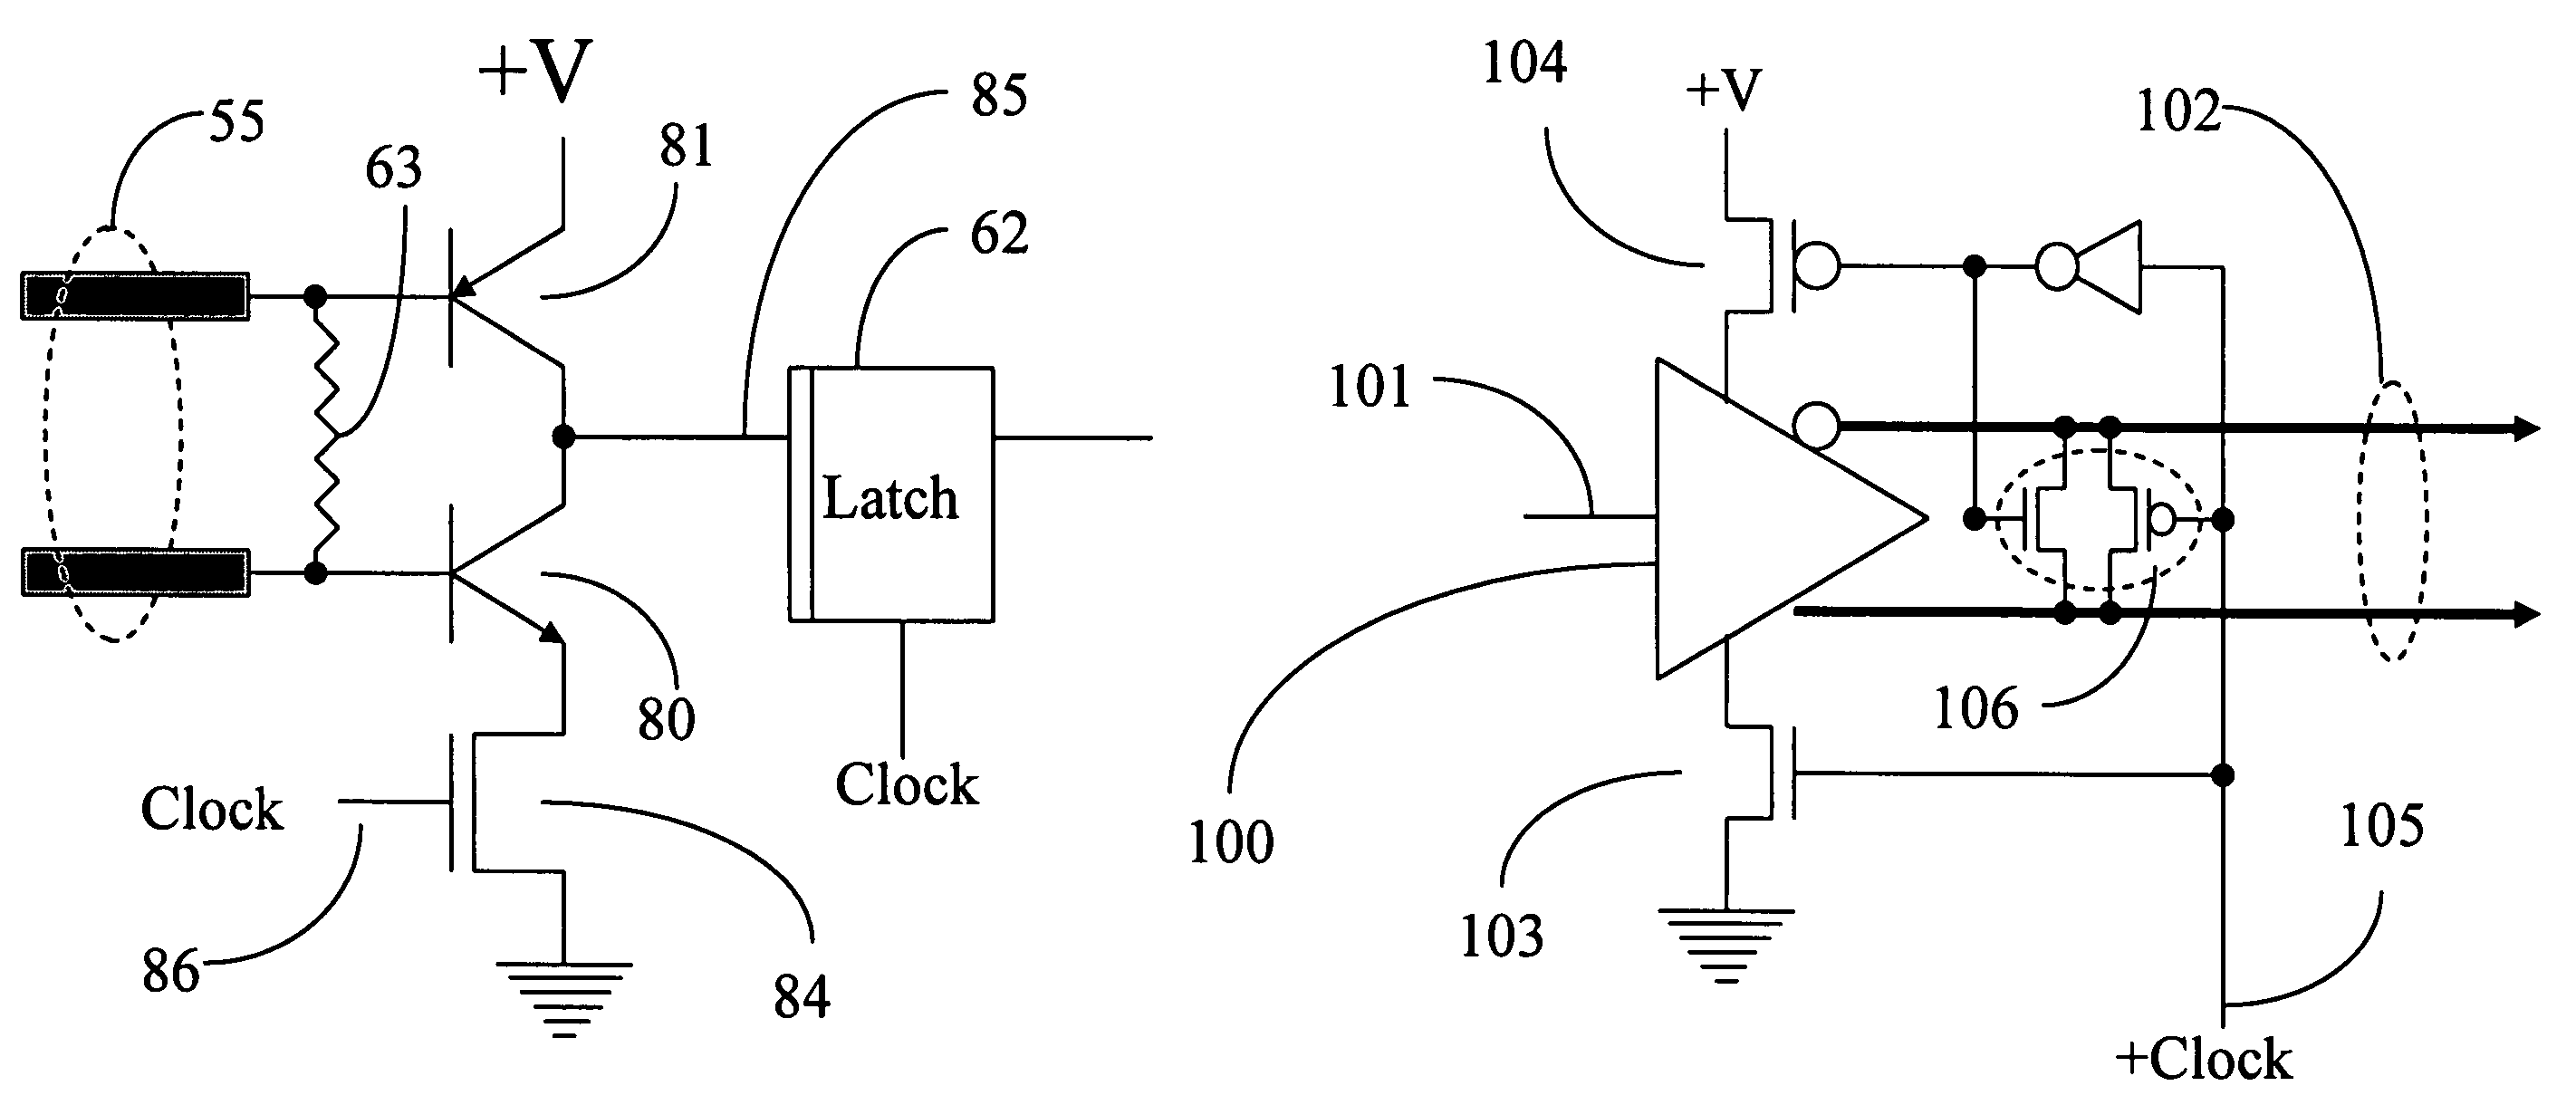 Integrated circuit communication techniques